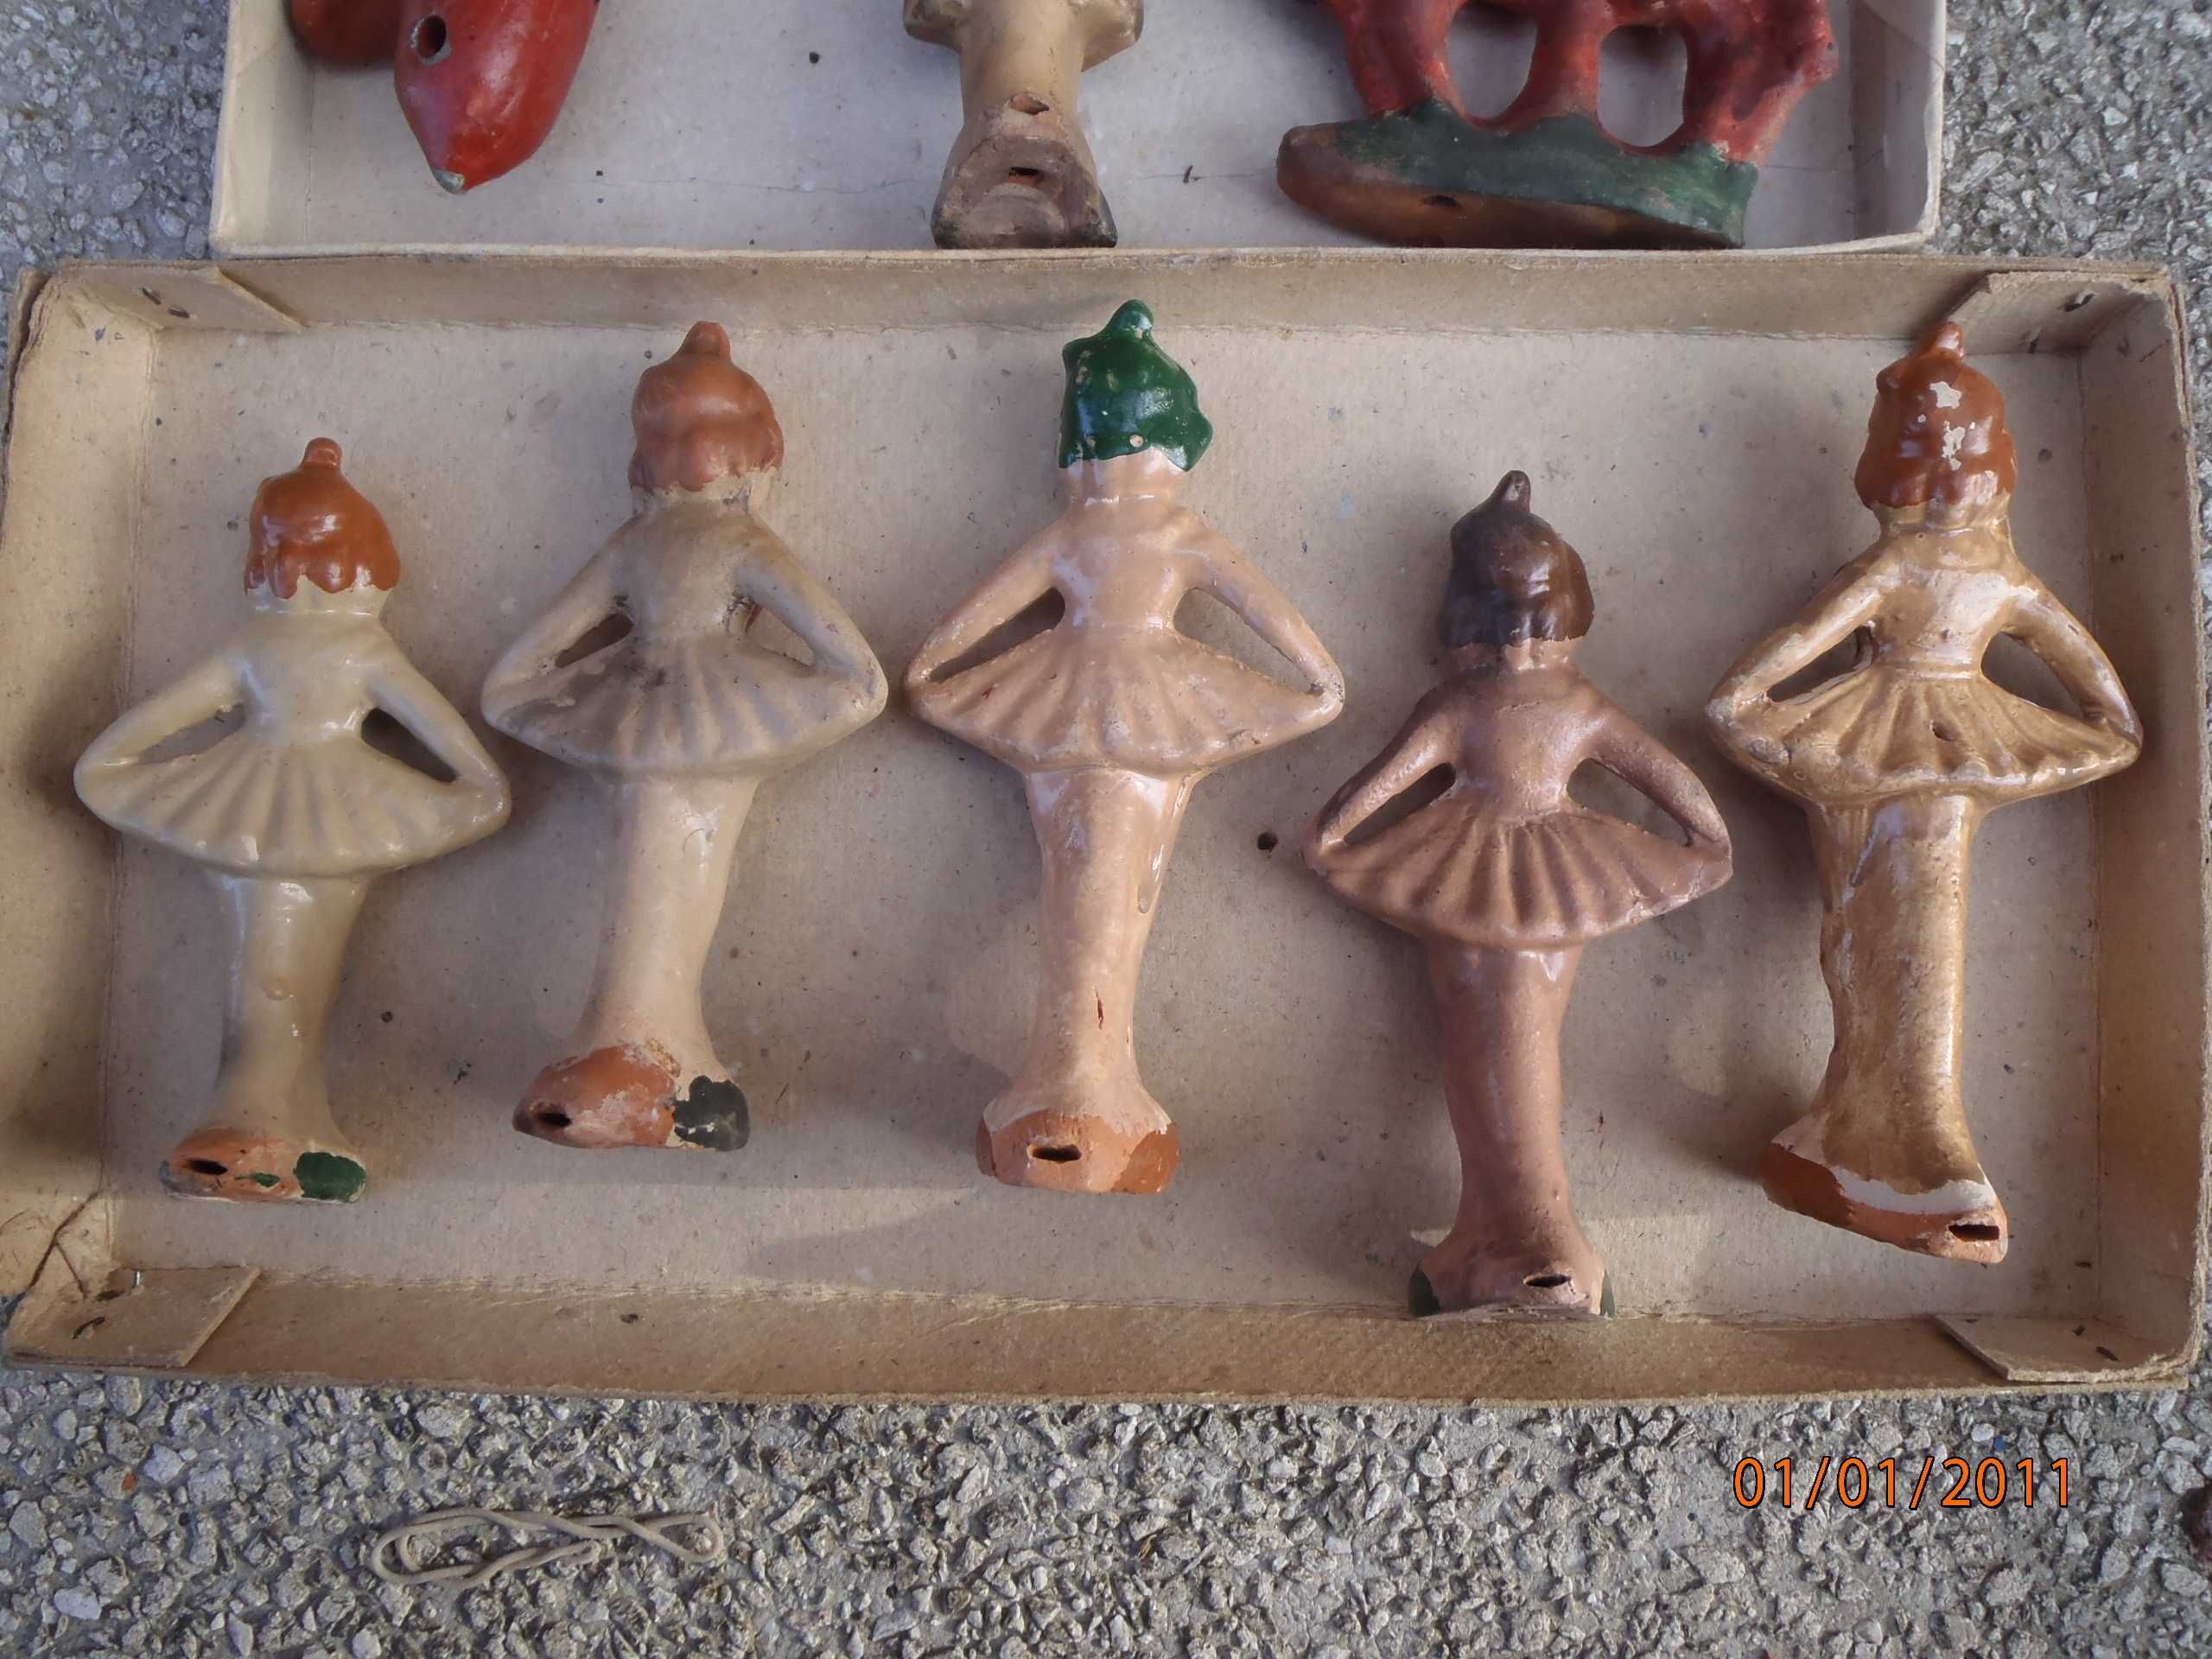 Ретро керамични фигури-окарини (свирки)- 20-те години 20 век.